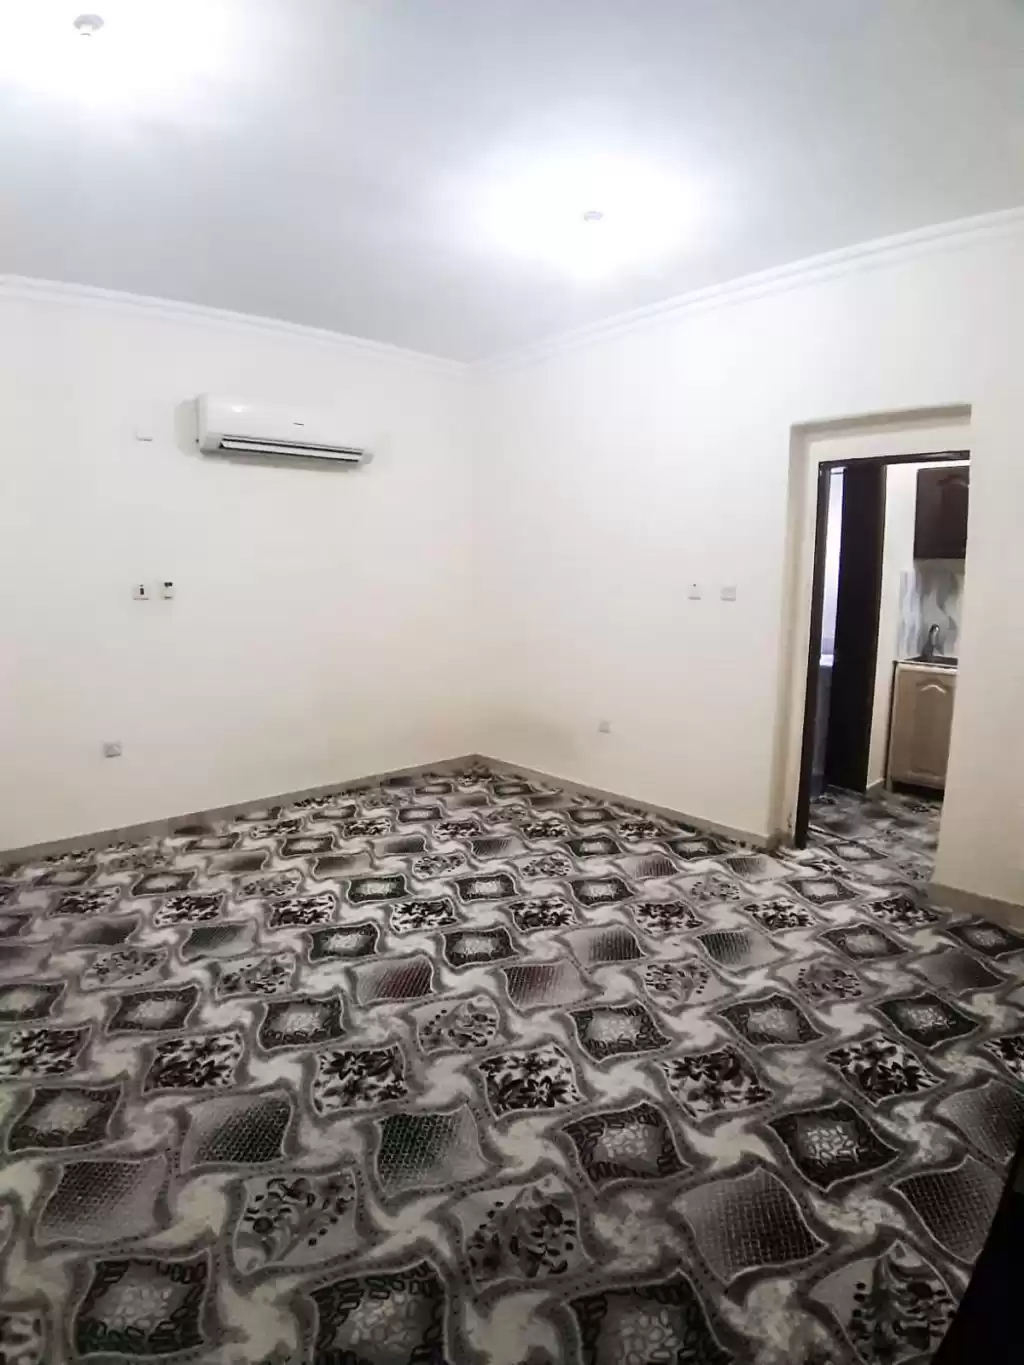 Résidentiel Propriété prête Studio U / f Appartement  a louer au Al-Sadd , Doha #13378 - 1  image 